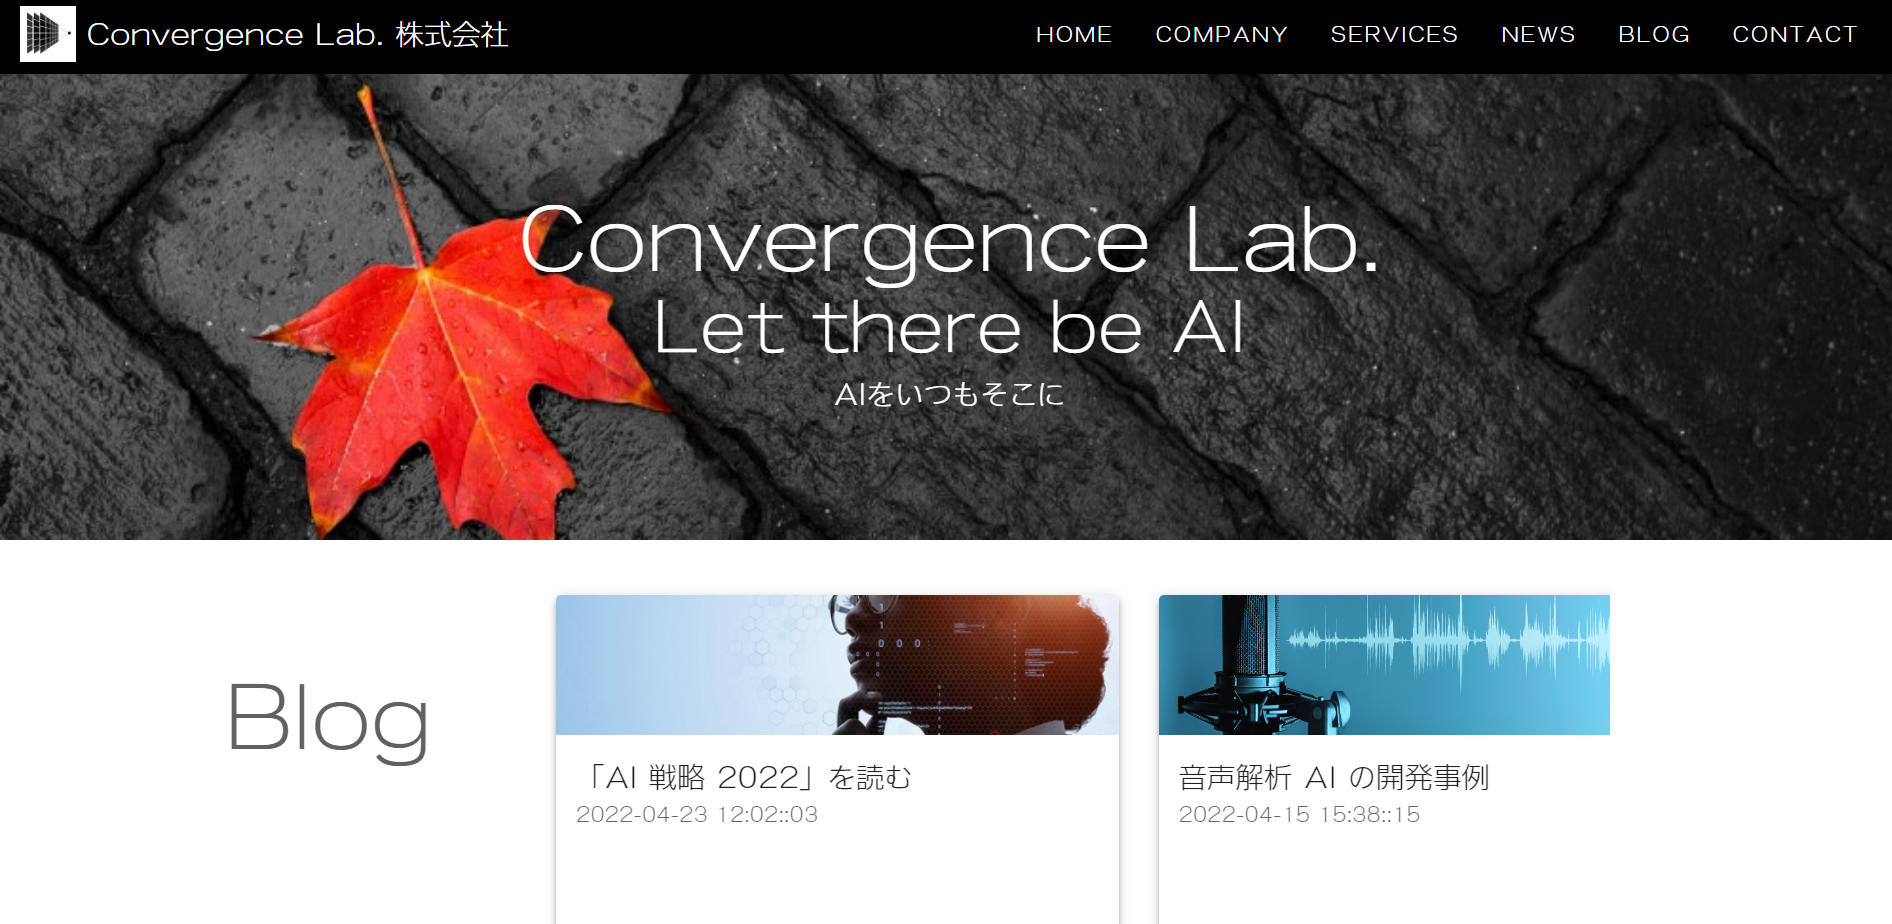 Convergence Lab.株式会社のConvergence Lab.株式会社:アプリ開発サービス